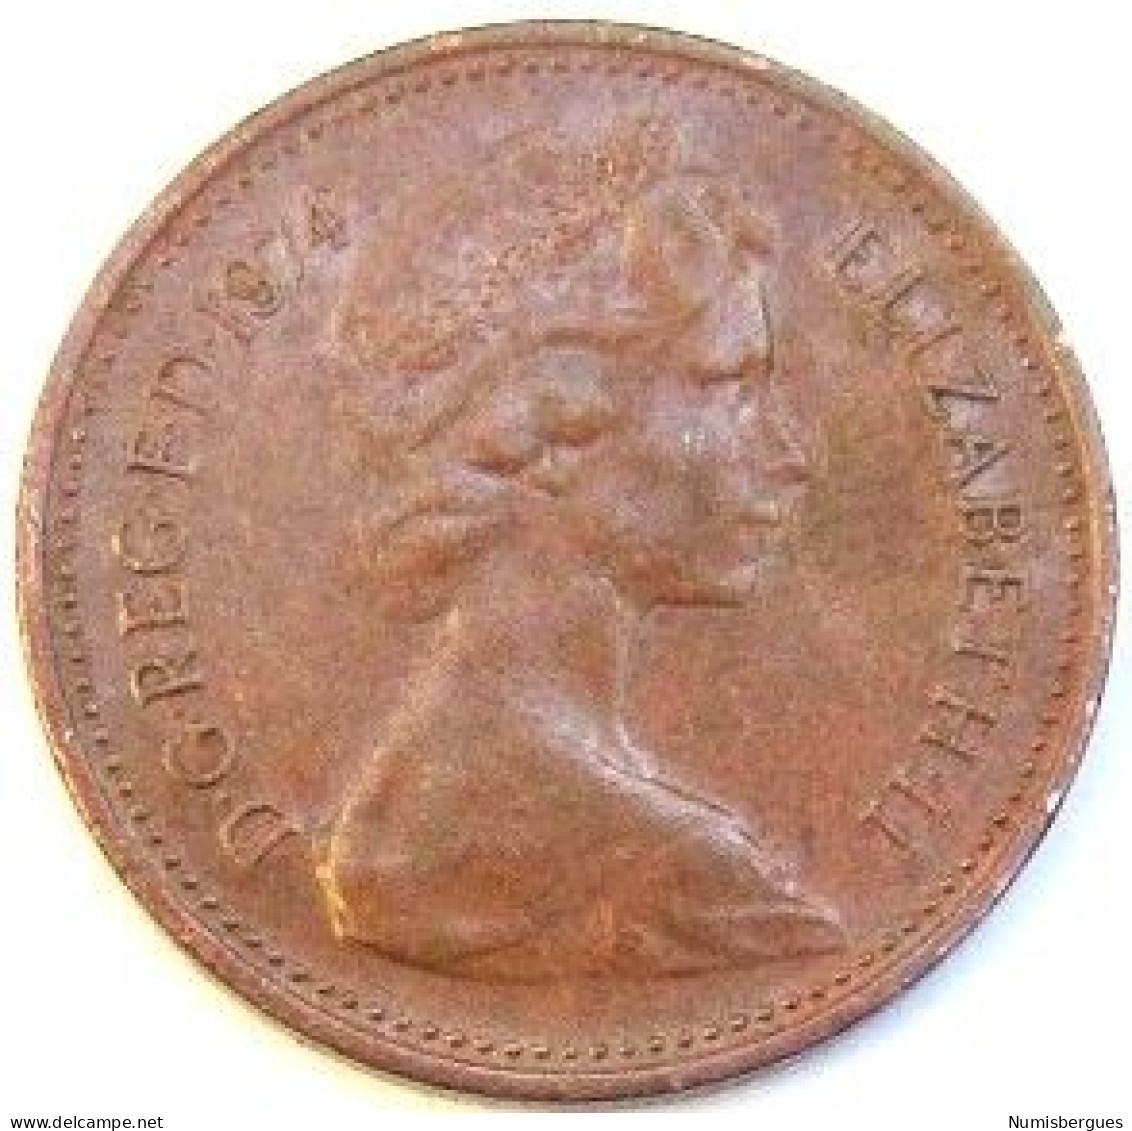 Pièce De Monnaie 1 Penny 1974 - 1 Penny & 1 New Penny